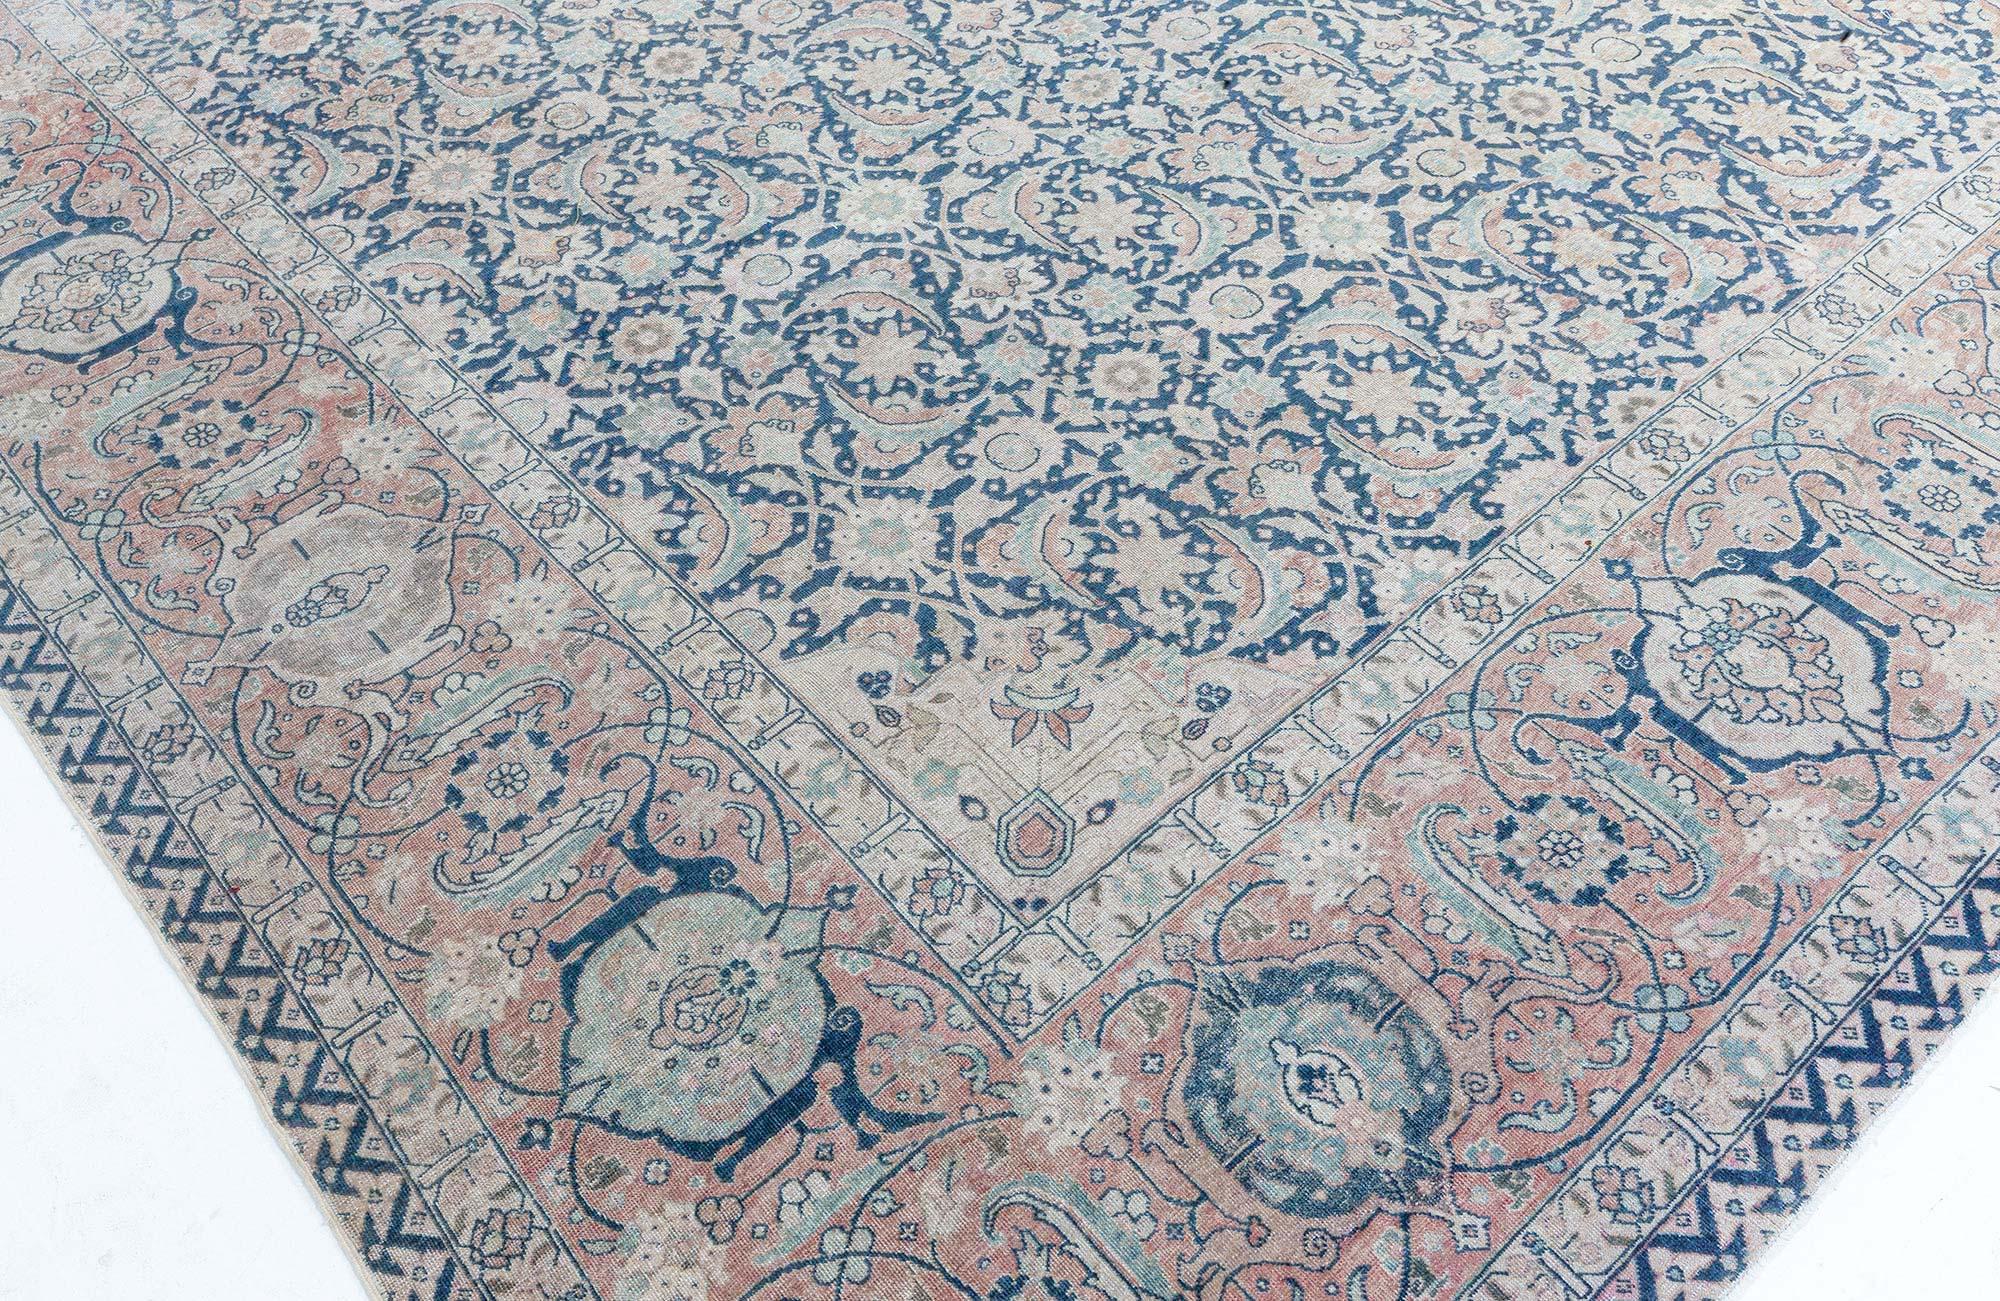 Antique Persian Tabriz rug.
Size: 13'9